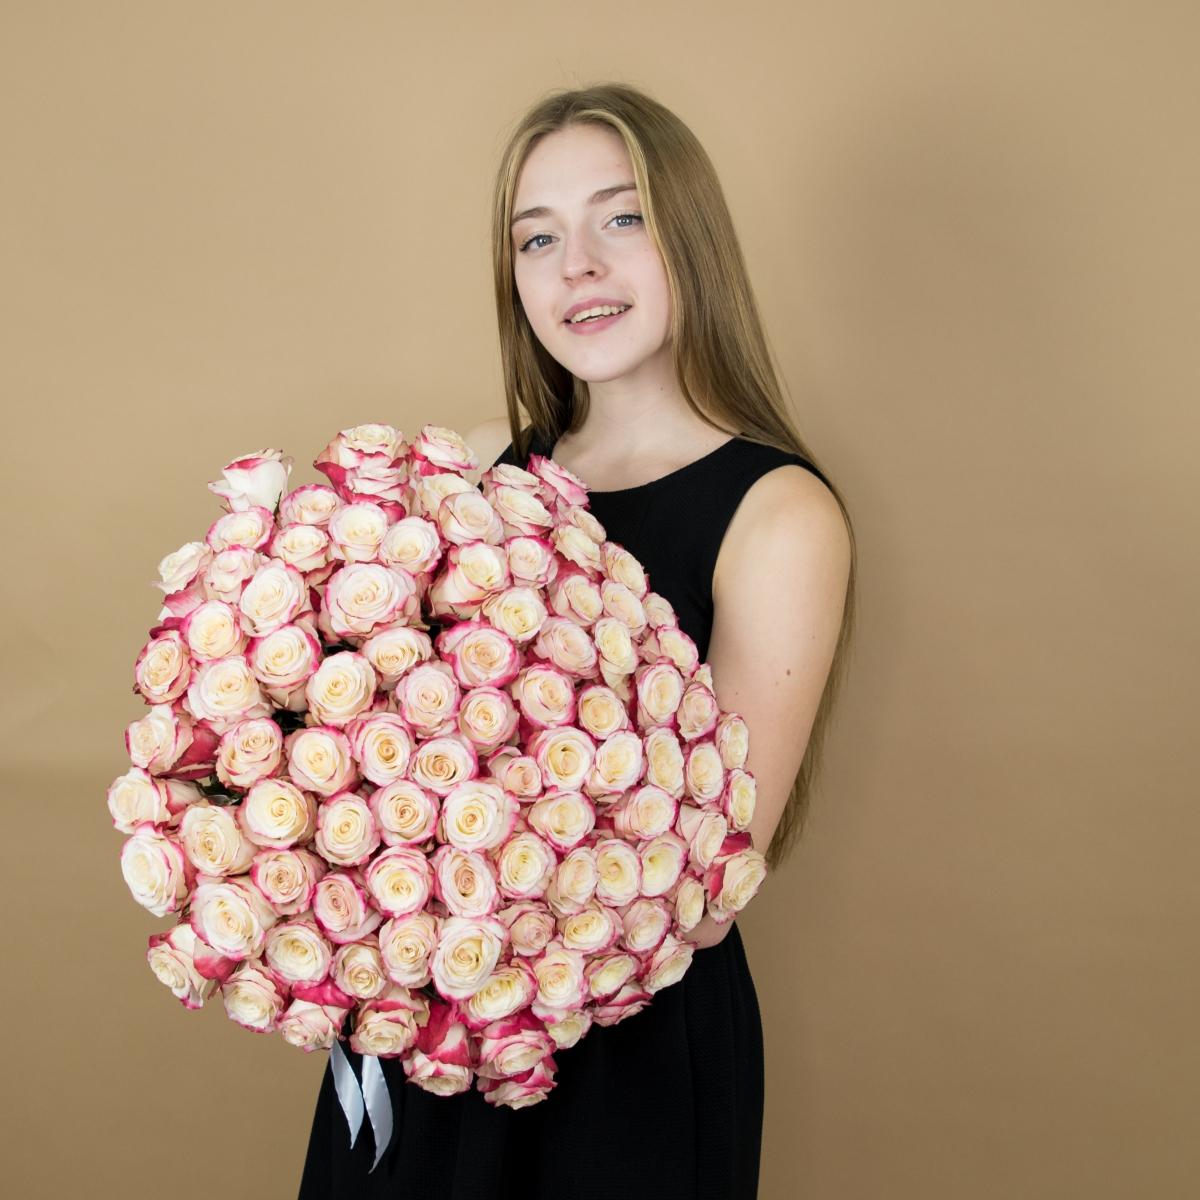 Розы красно-белые 101 шт. (40 см) артикул букета: 5340smr